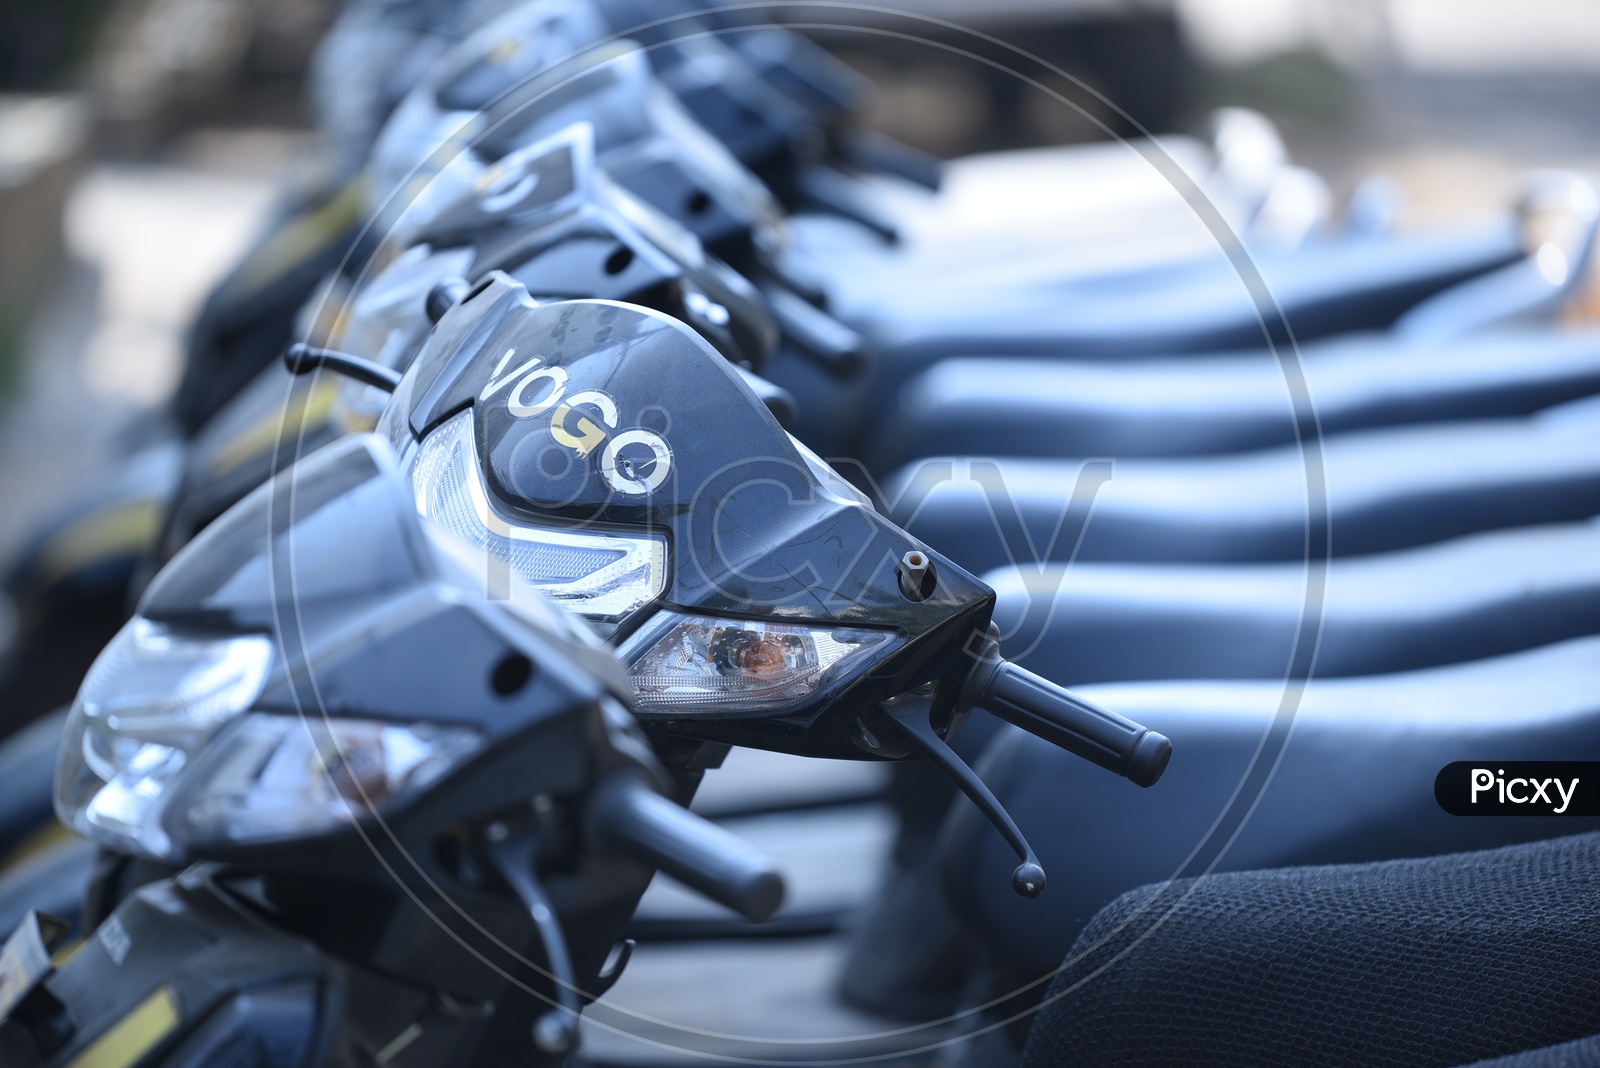 VOGO Rented Bikes Parked At a Hub Or VOGO Station